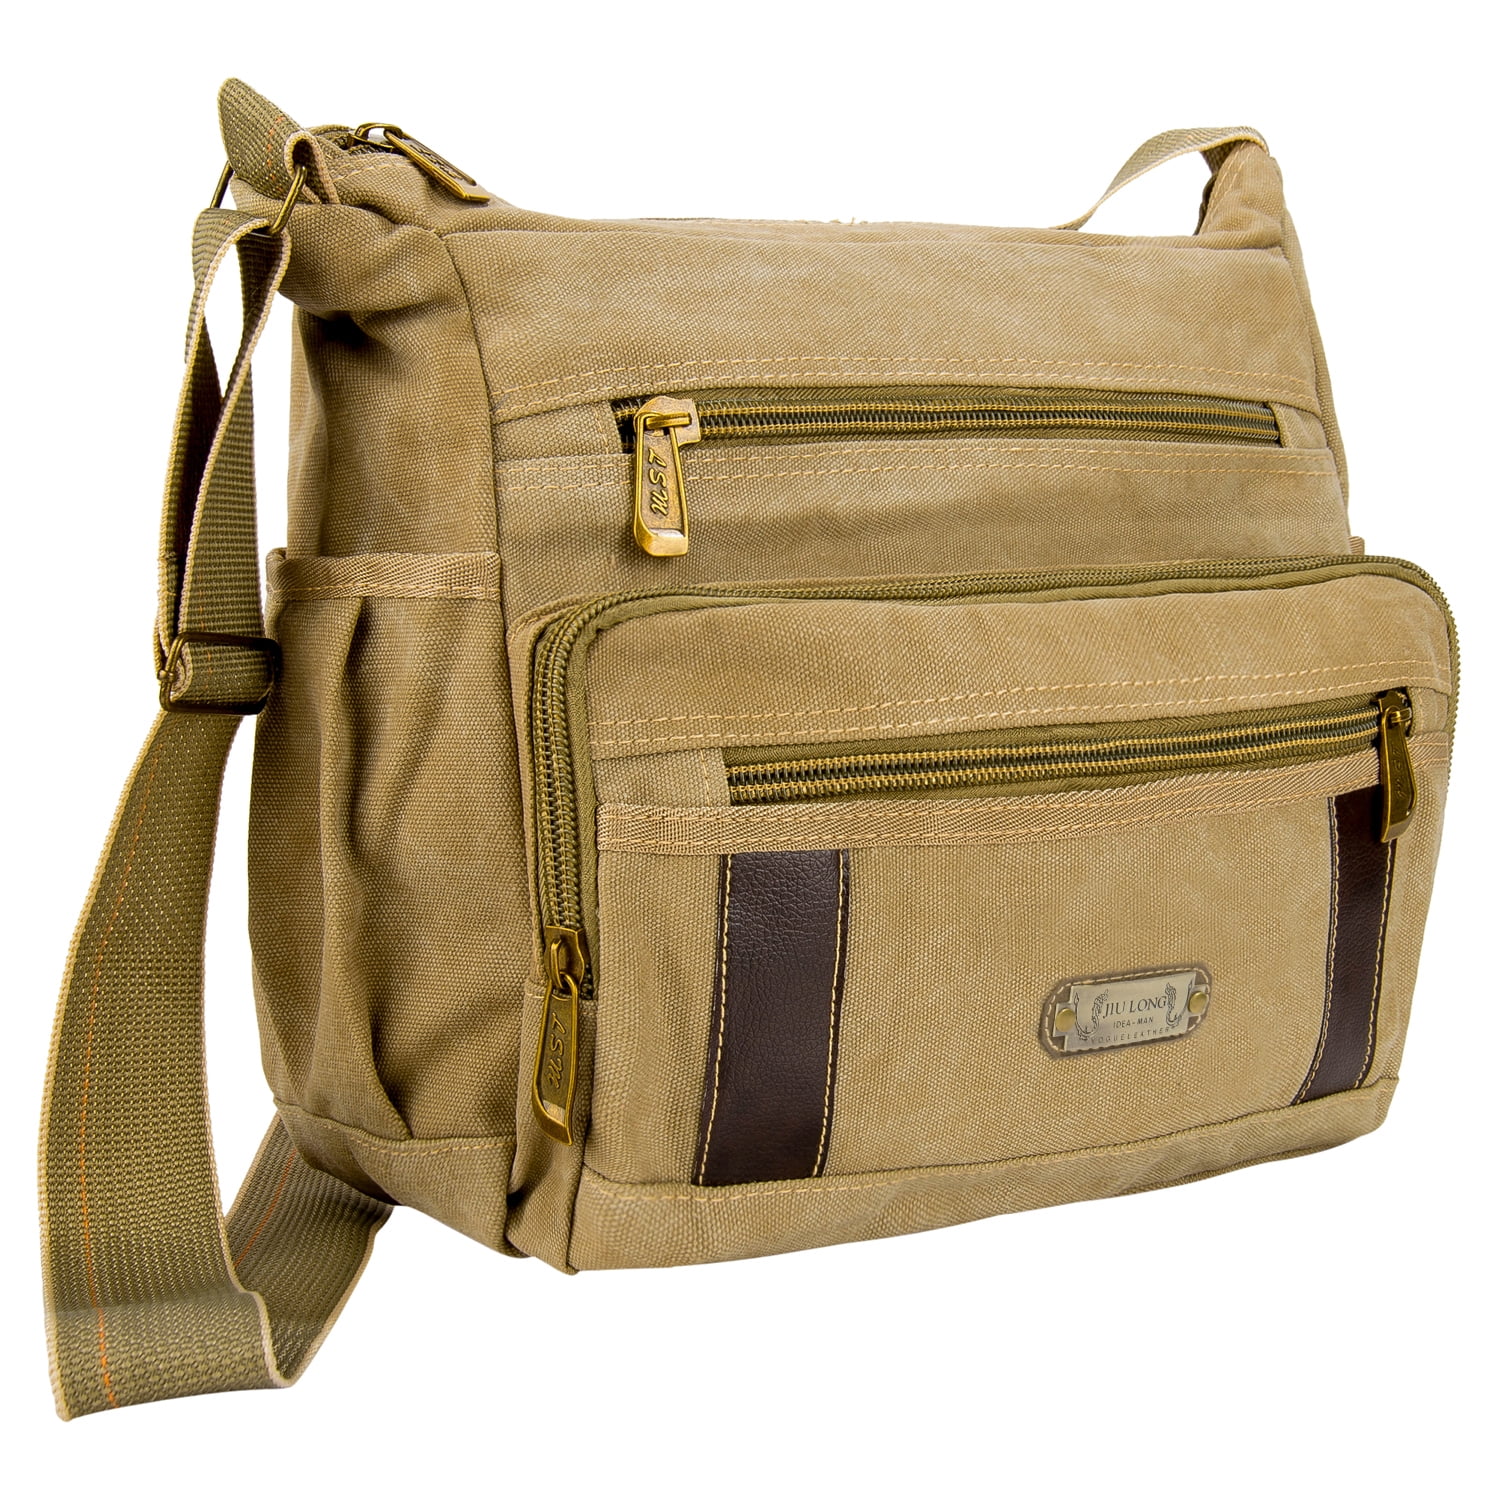 FOSTAK Messenger Bag for Men and Women Fit 13.3 Inch Laptop Multi-Pocket Shoulder Bag Padded Canvas Briefcase Lightweight School Satchel for College Work Travel and Daily Use,Black 